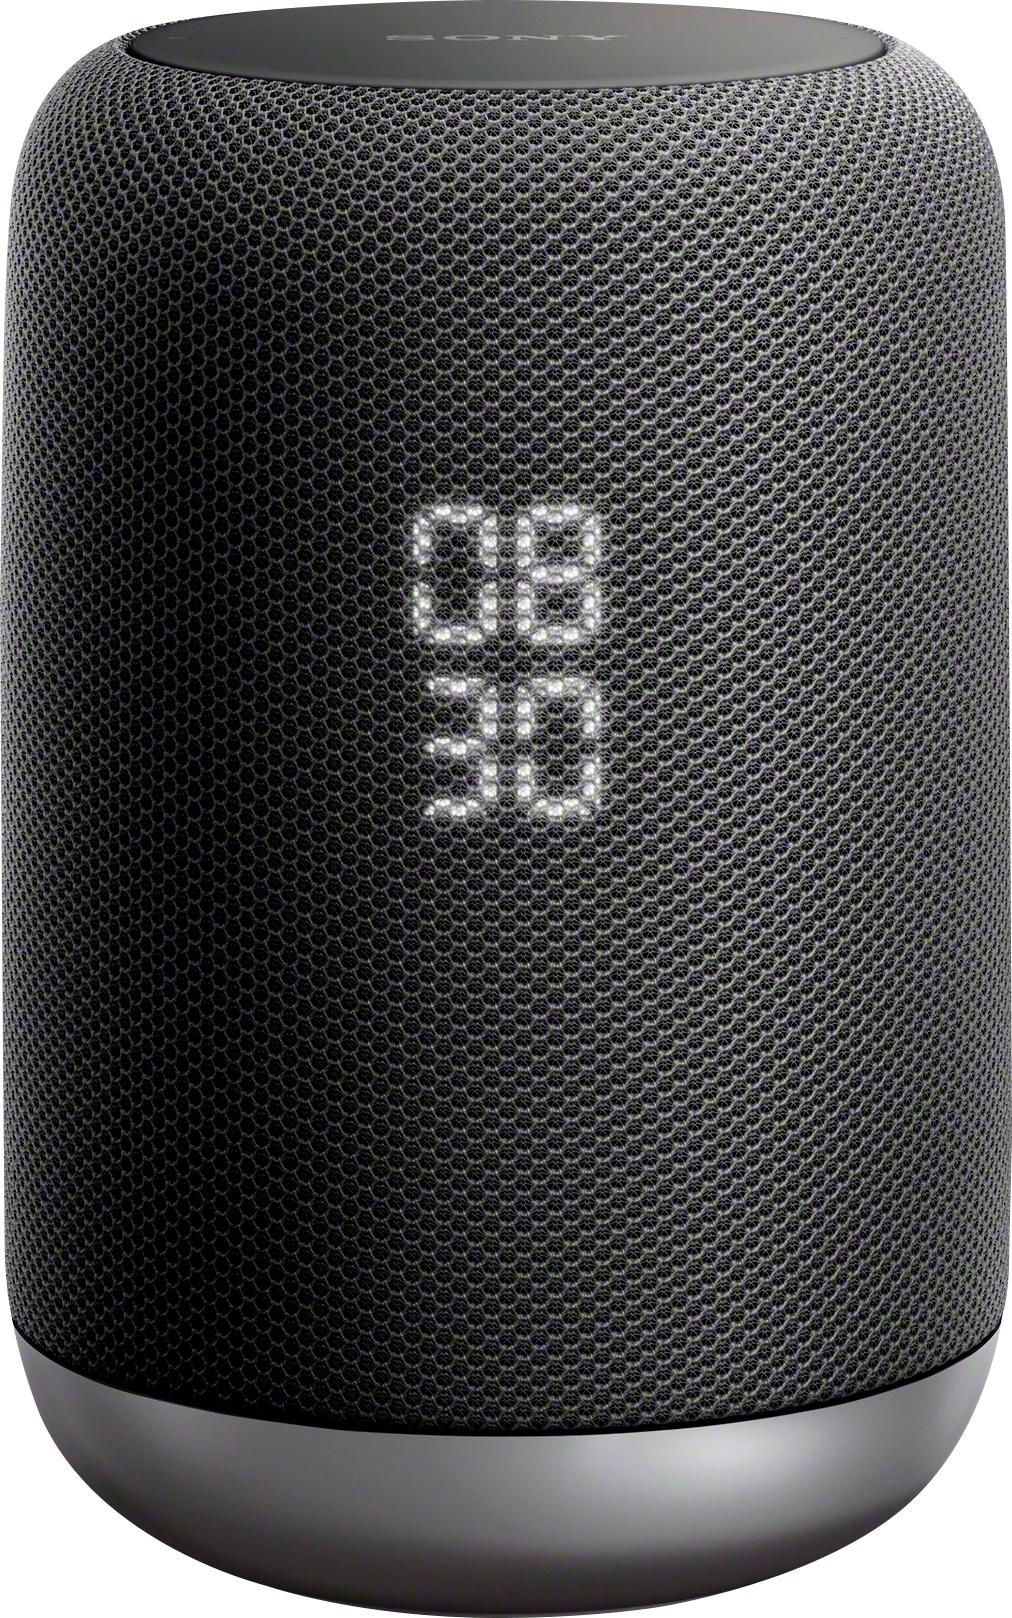 Sony LF-S50G Smart Bluetooth Speaker 